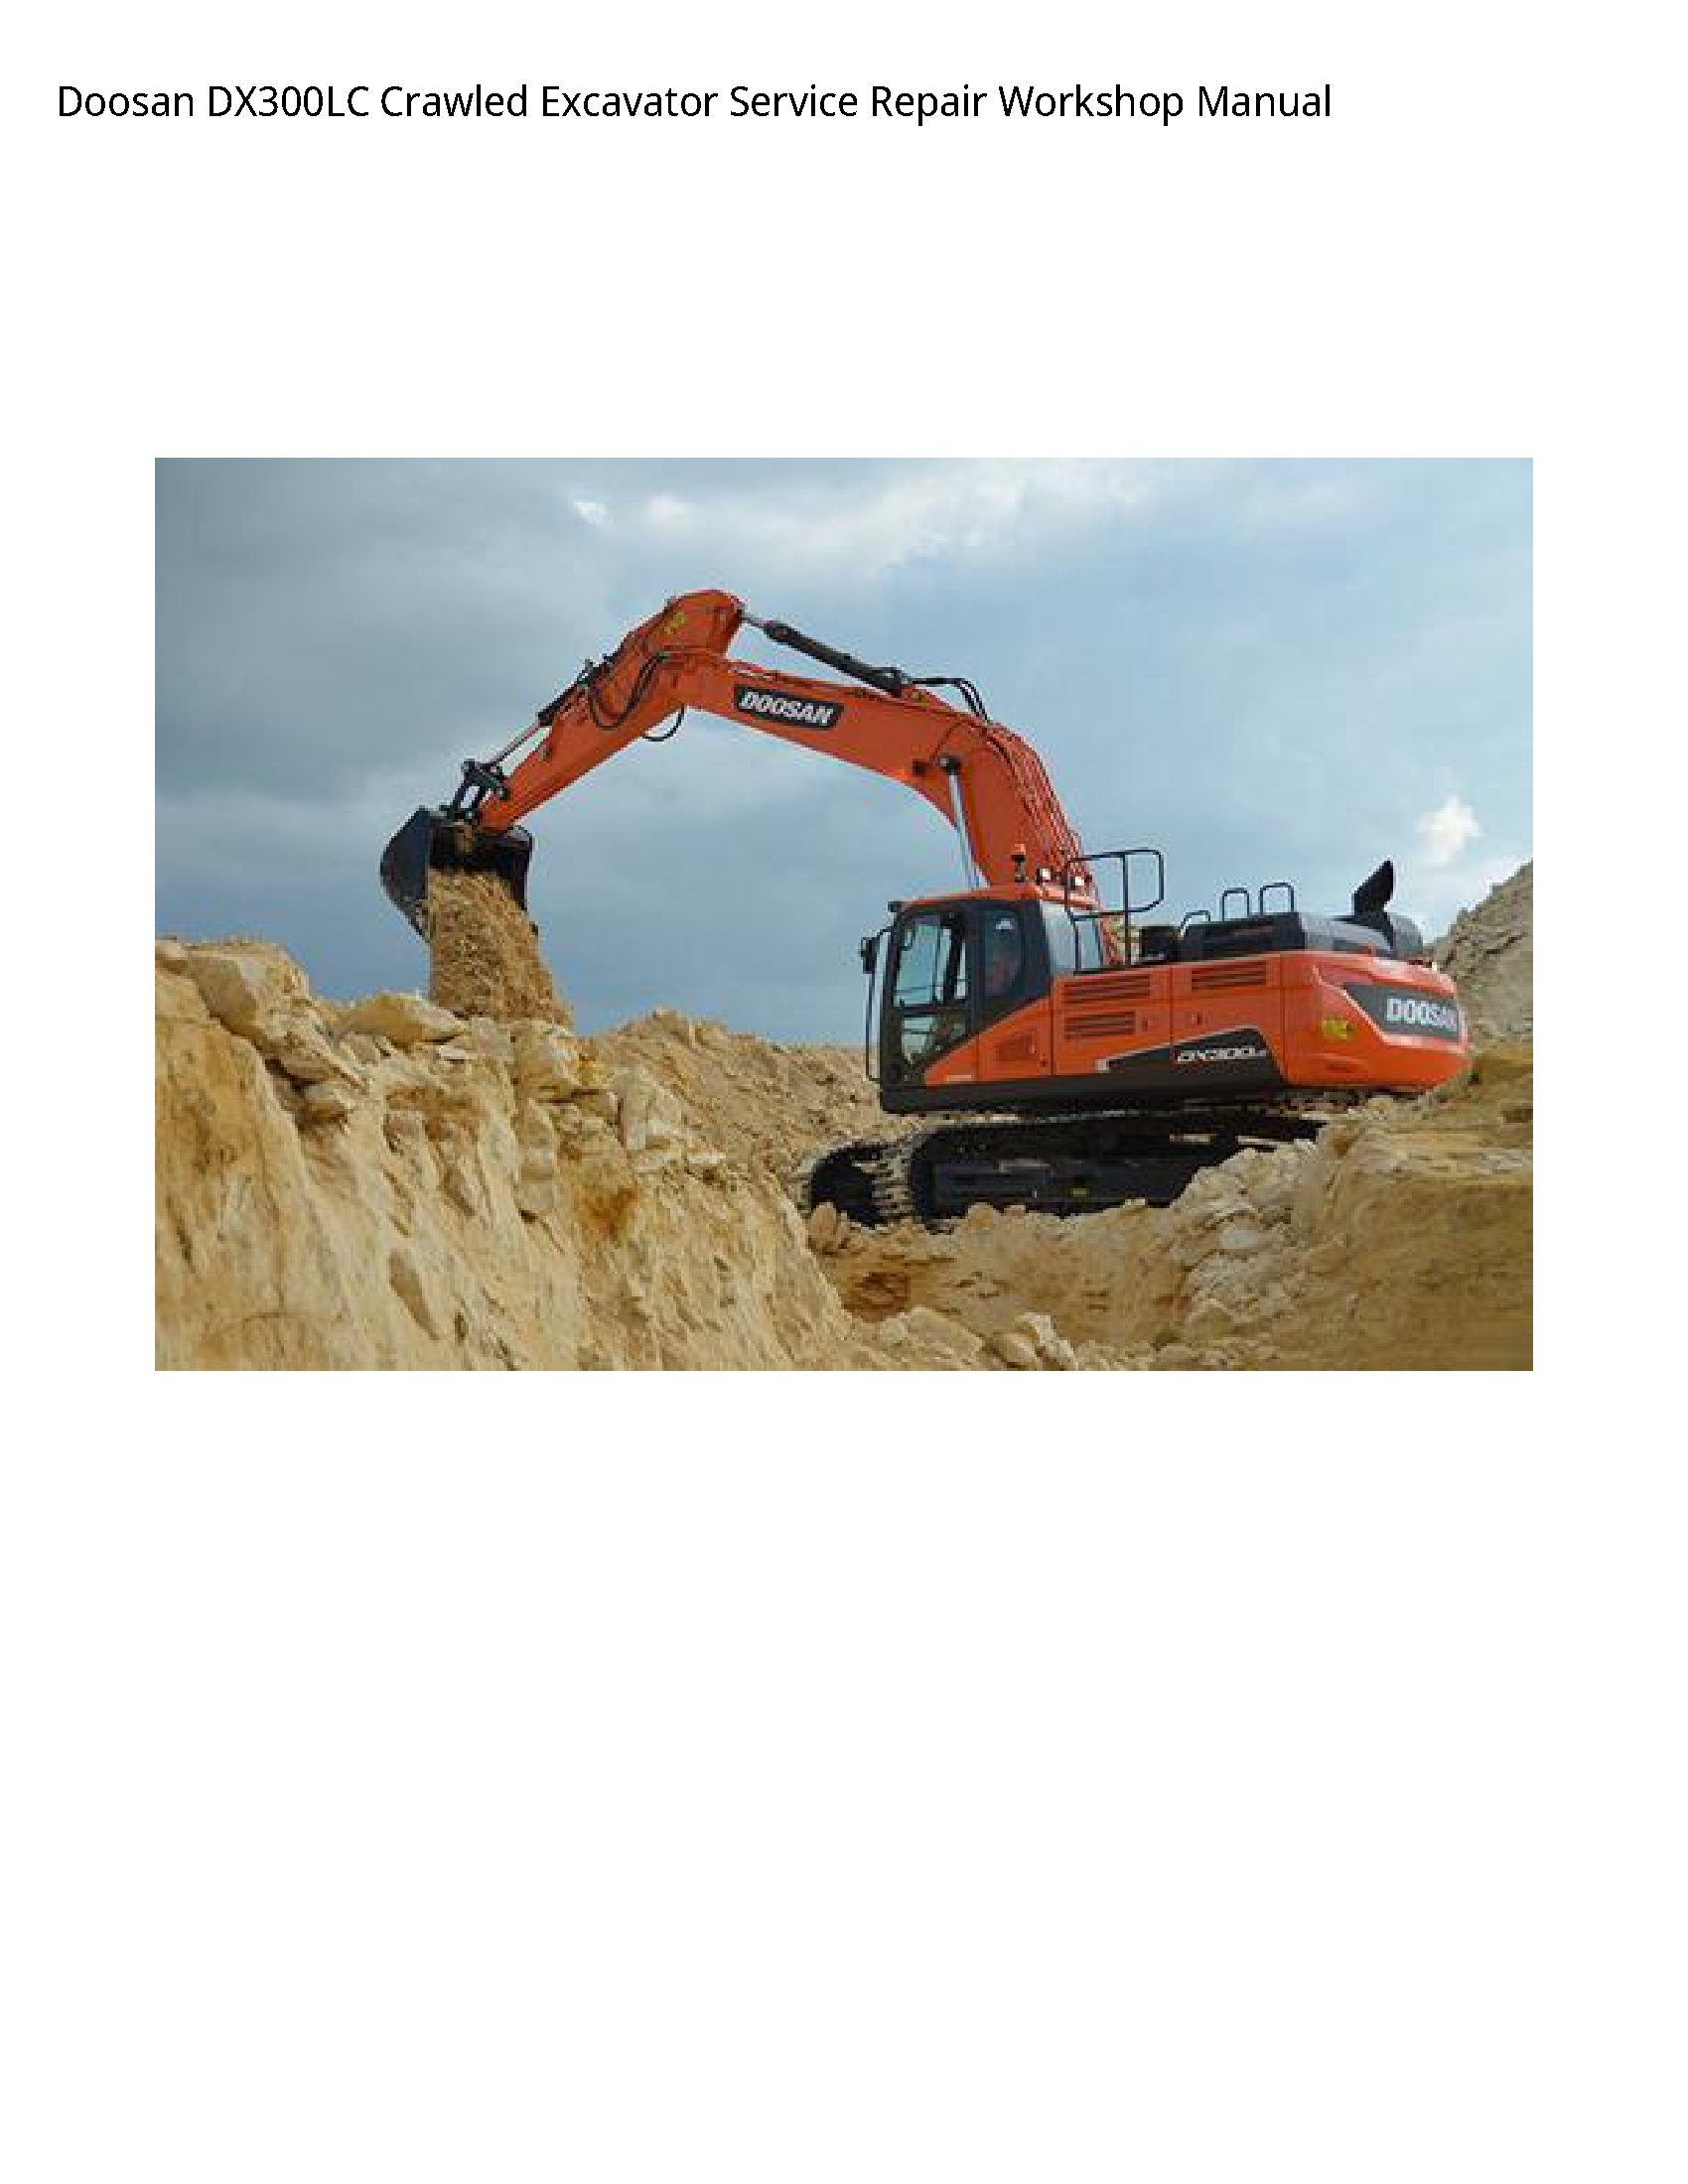 Doosan DX300LC Crawled Excavator manual